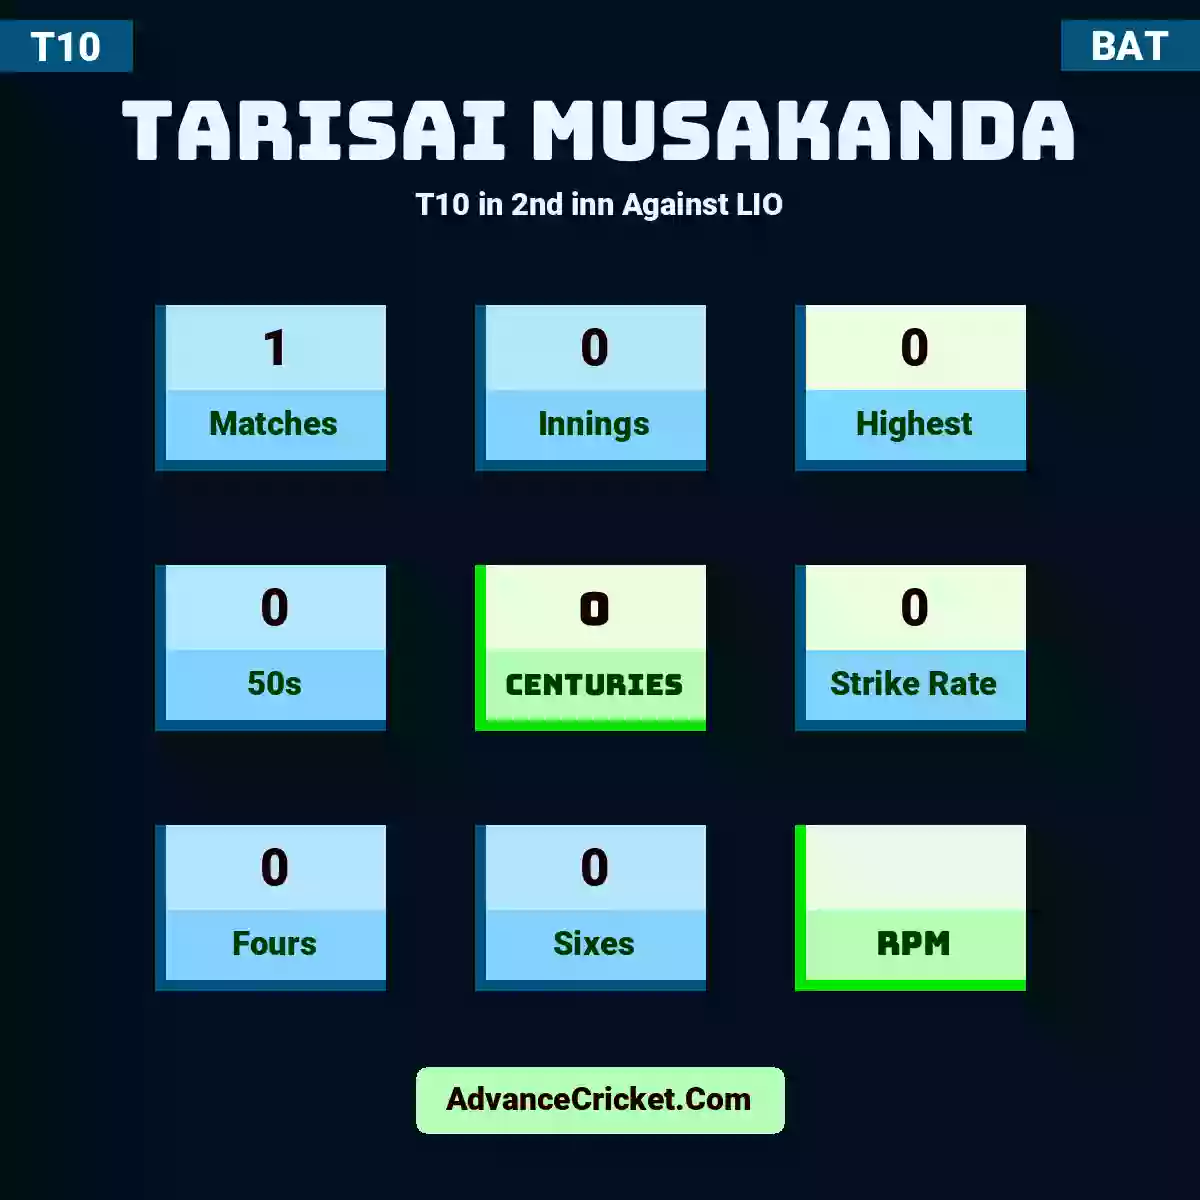 Tarisai Musakanda T10  in 2nd inn Against LIO, Tarisai Musakanda played 1 matches, scored 0 runs as highest, 0 half-centuries, and 0 centuries, with a strike rate of 0. T.Musakanda hit 0 fours and 0 sixes.